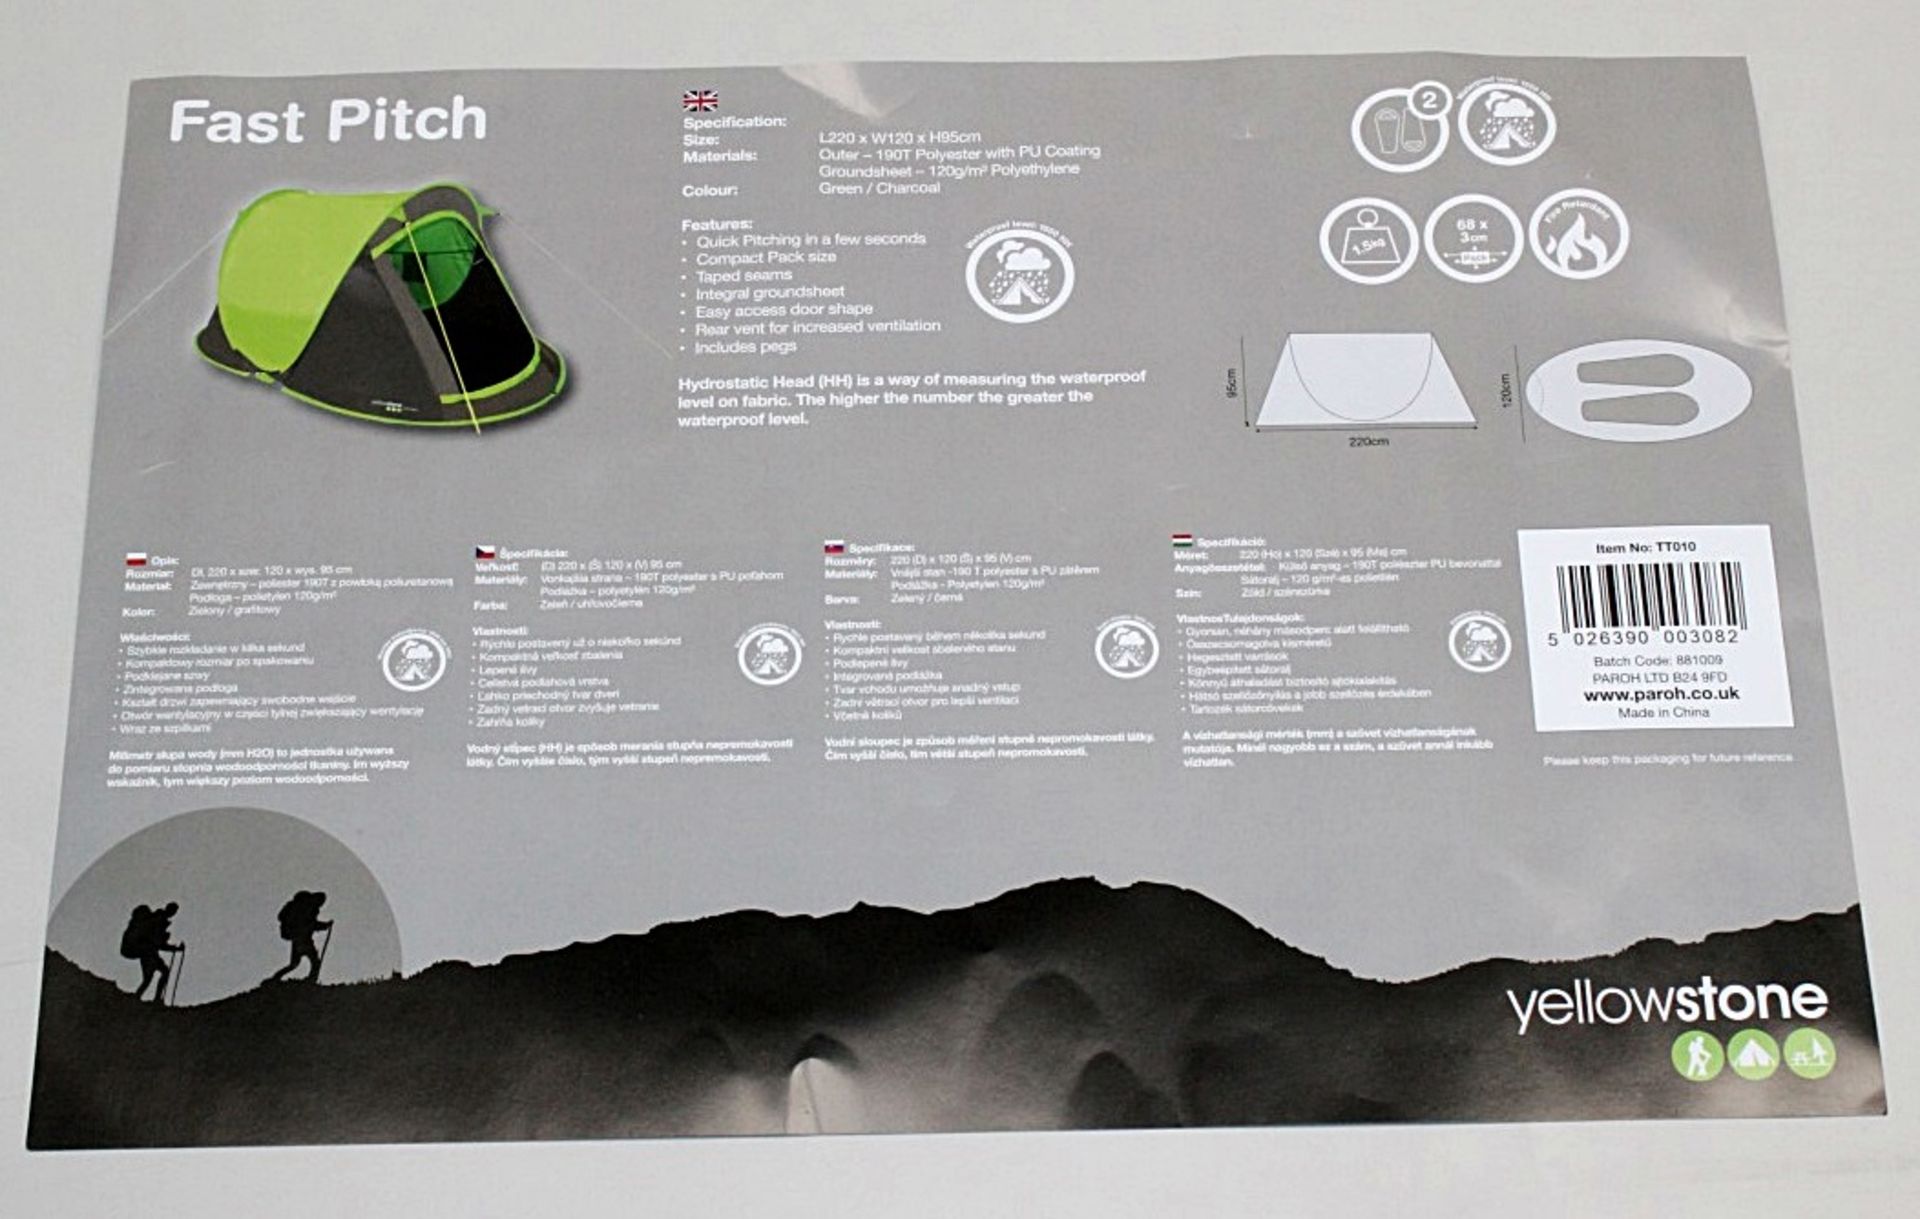 1 x Yellowstone Fast Pitch 2-Man Pop-up Tent In Green (TT010) - Fire Retardant - Waterproof - - Image 5 of 5